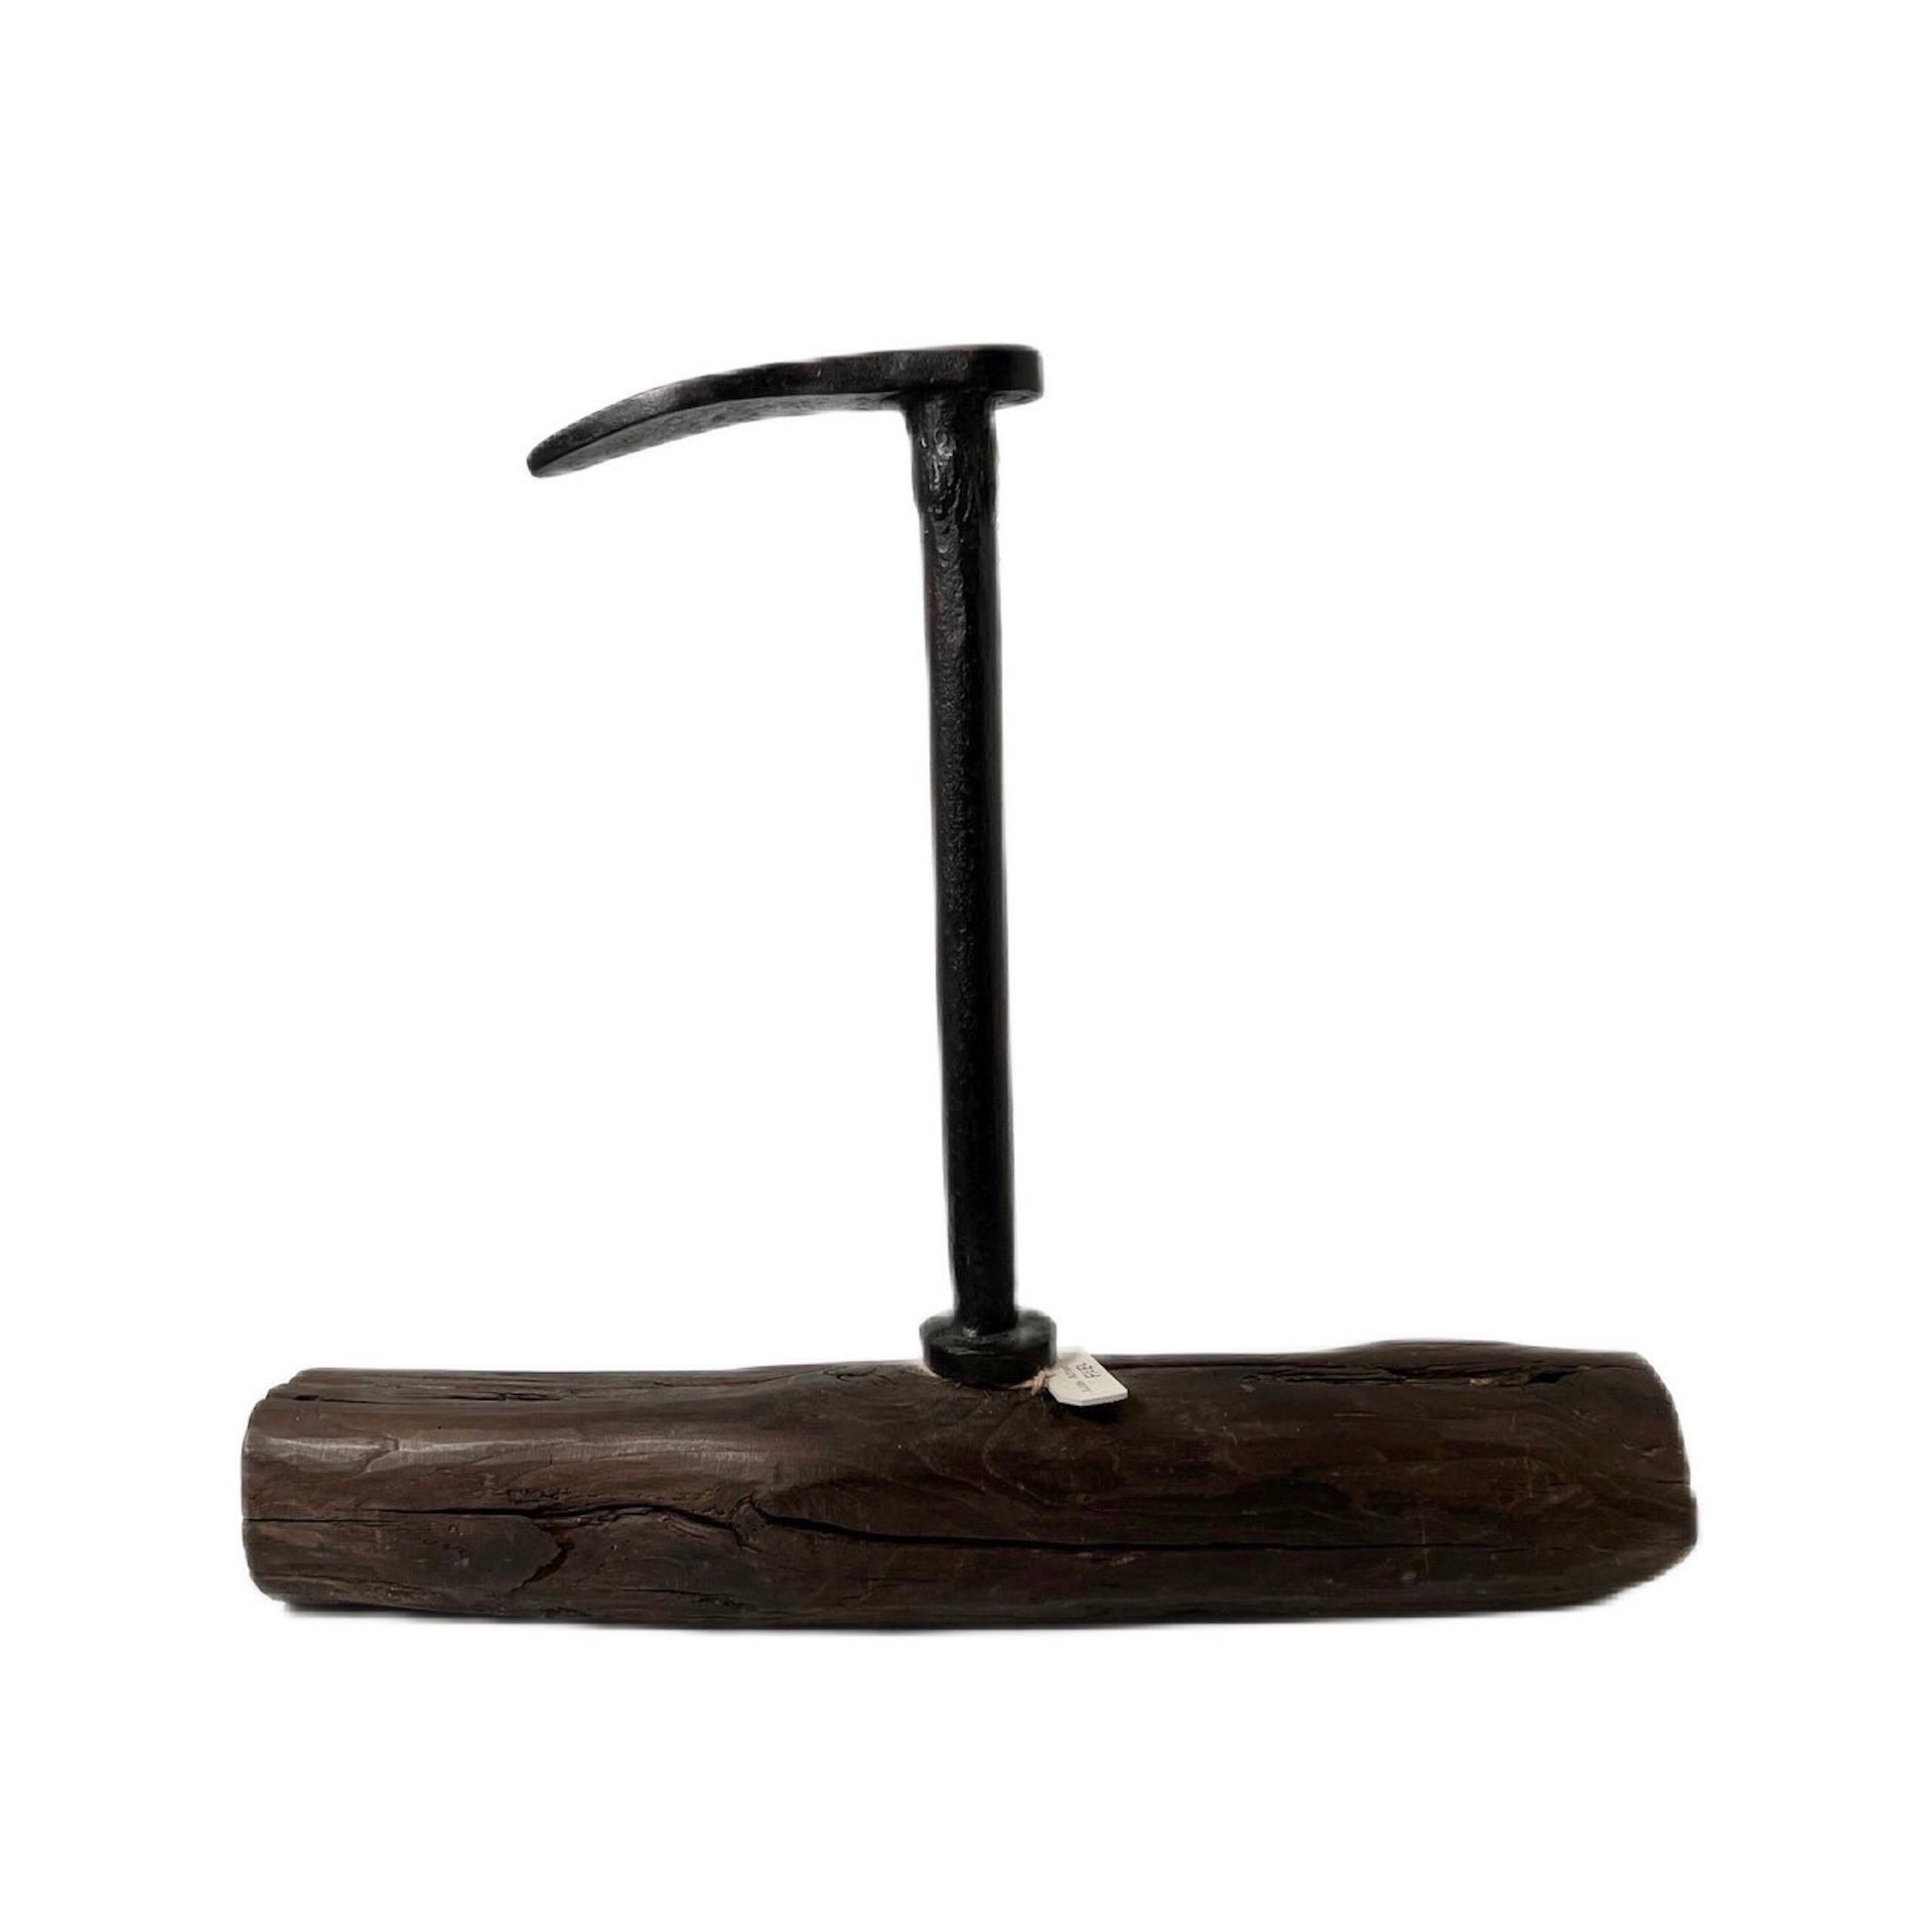 【FEEL】古道具 Antique shoemaker anvil with peana